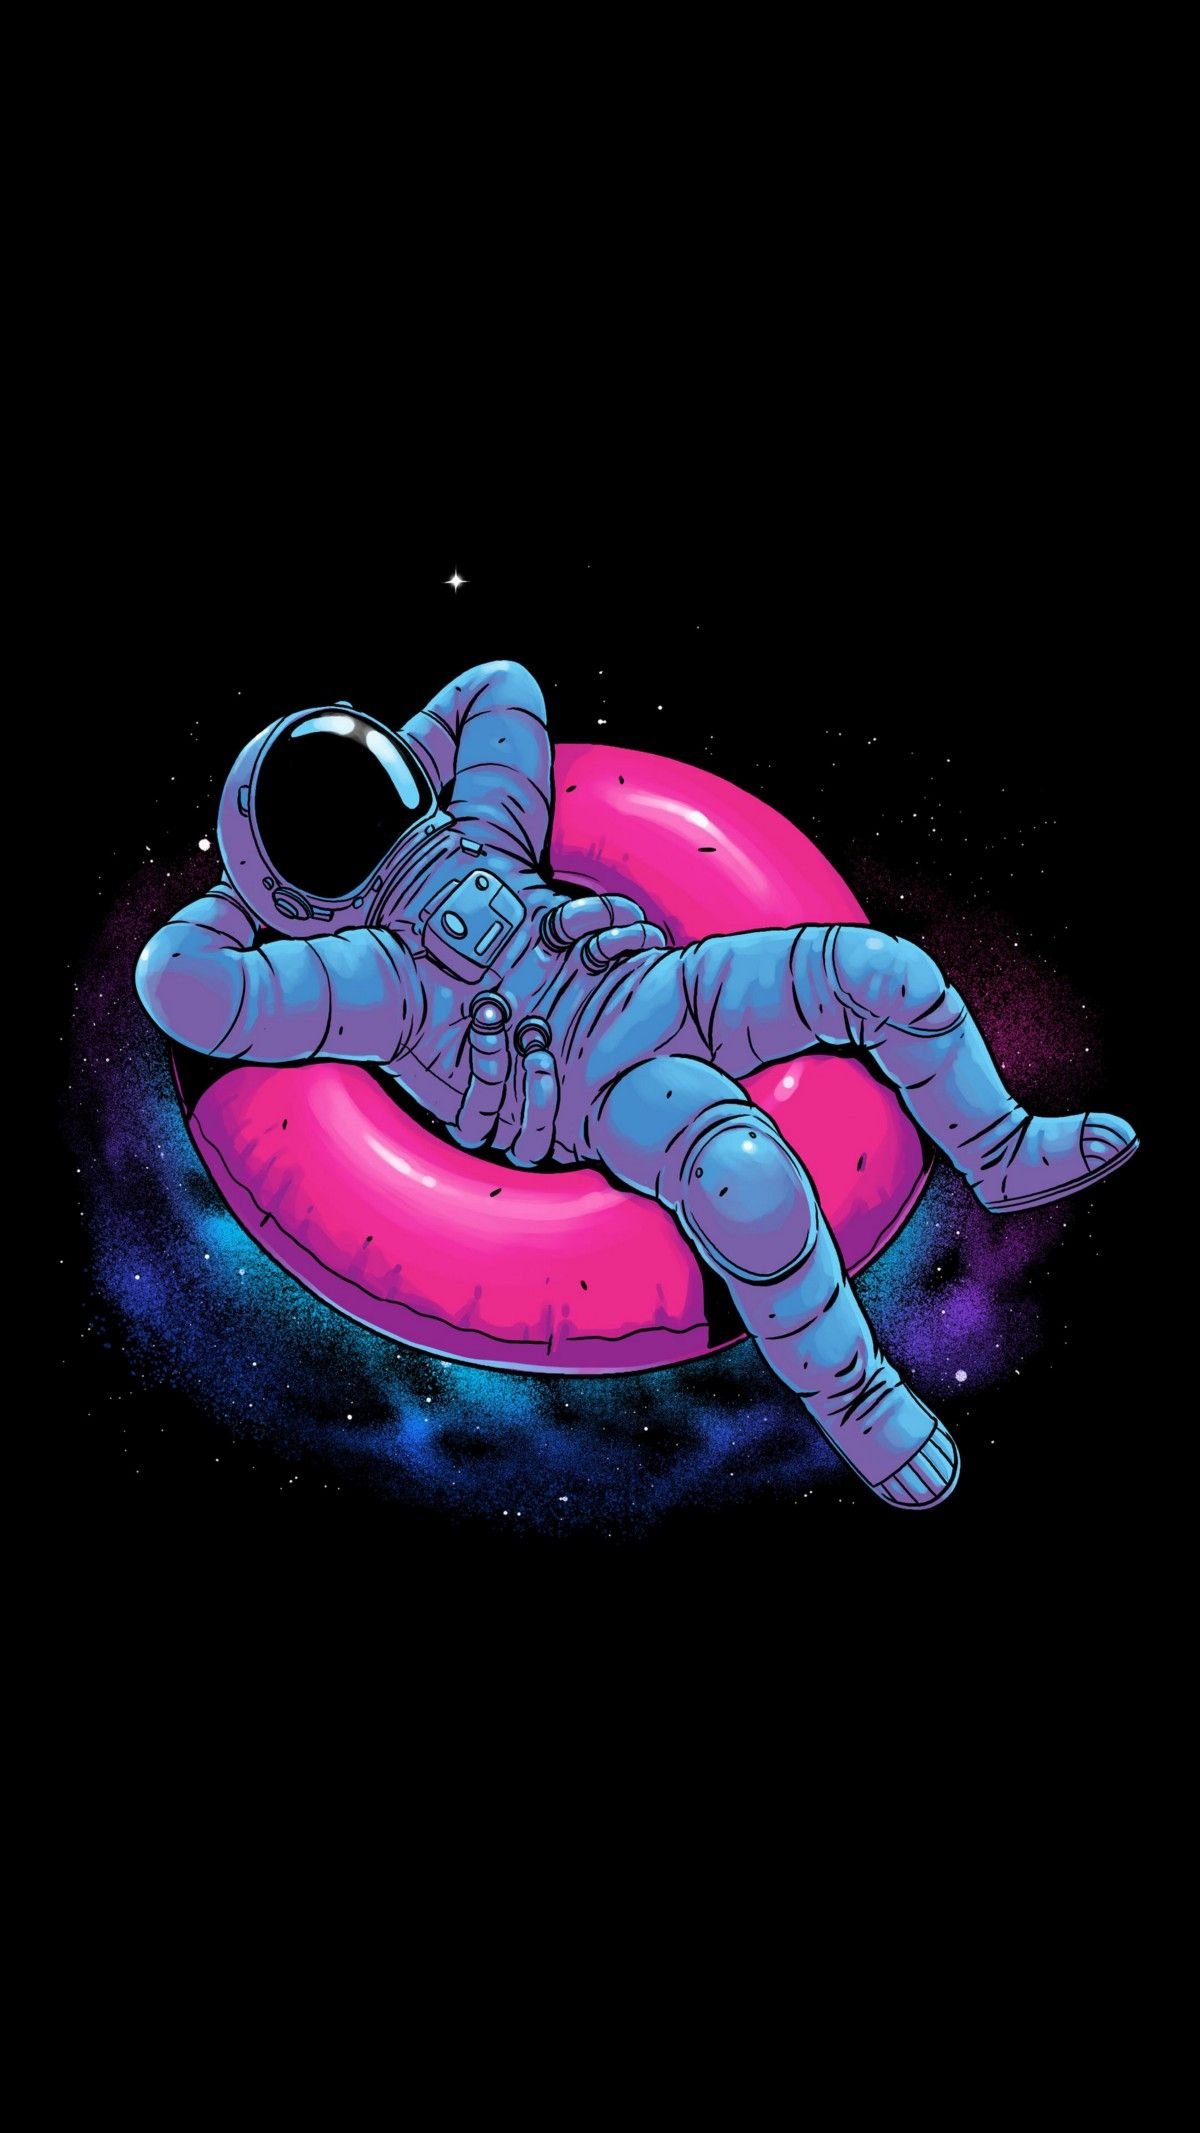 iPhone Wallpaper. Cartoon, Astronaut, Illustration, Graphic design, Space, Animation